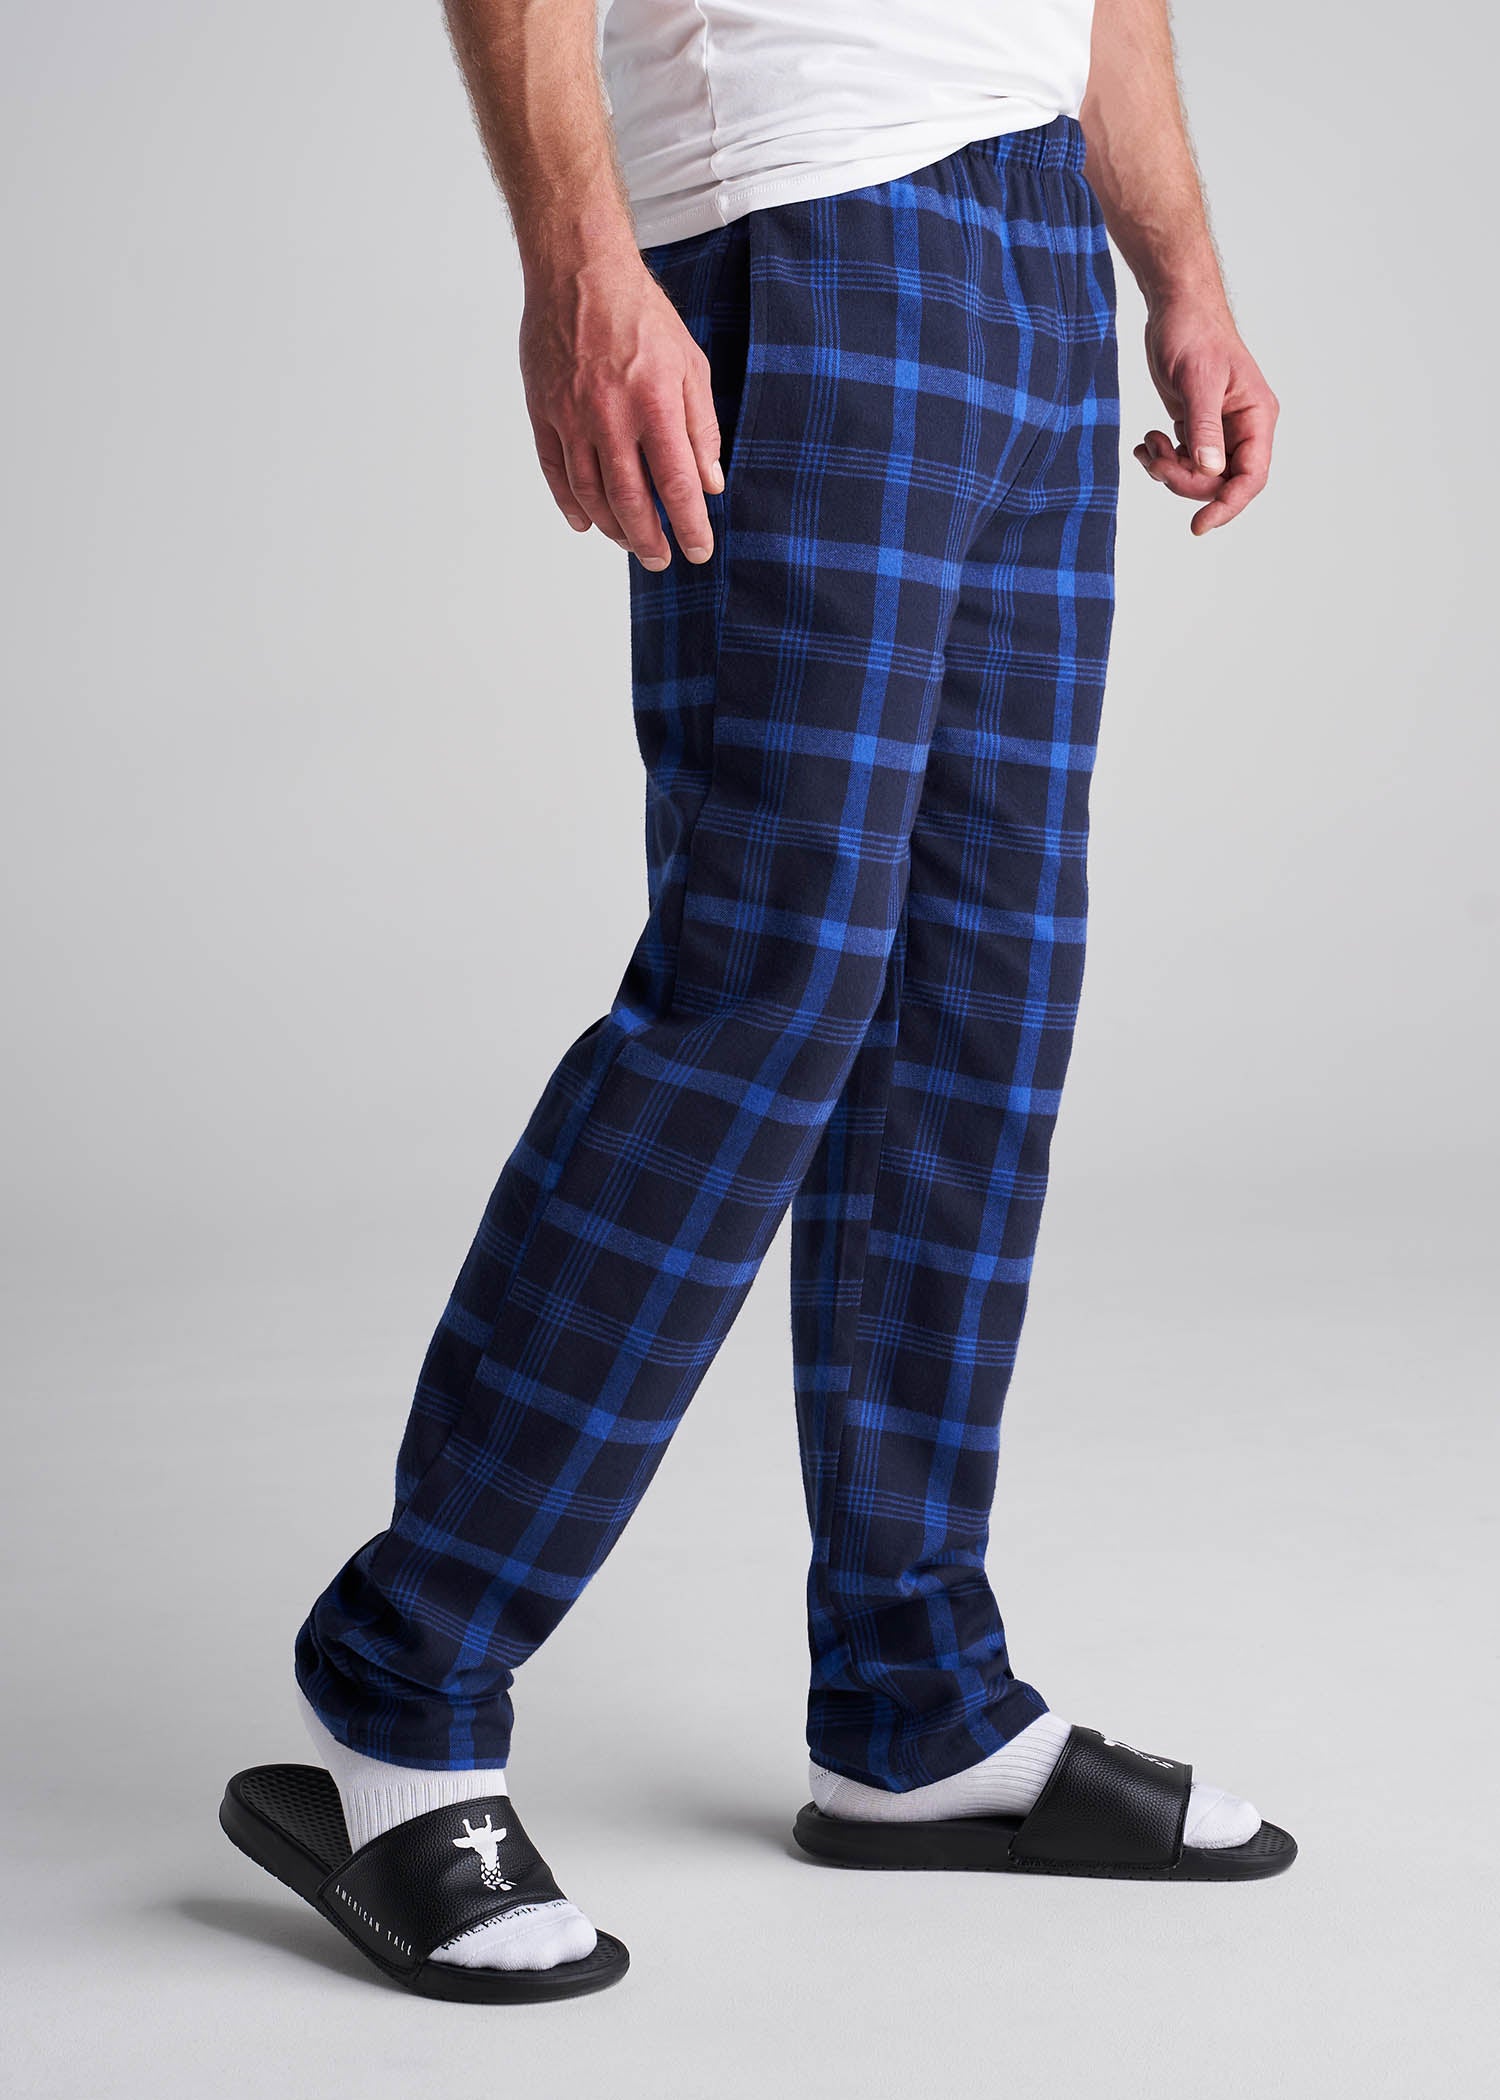 Printed Flannel Pajama Pants for Men 100% Soft Cotton L Black Buffalo Plaid  | eBay